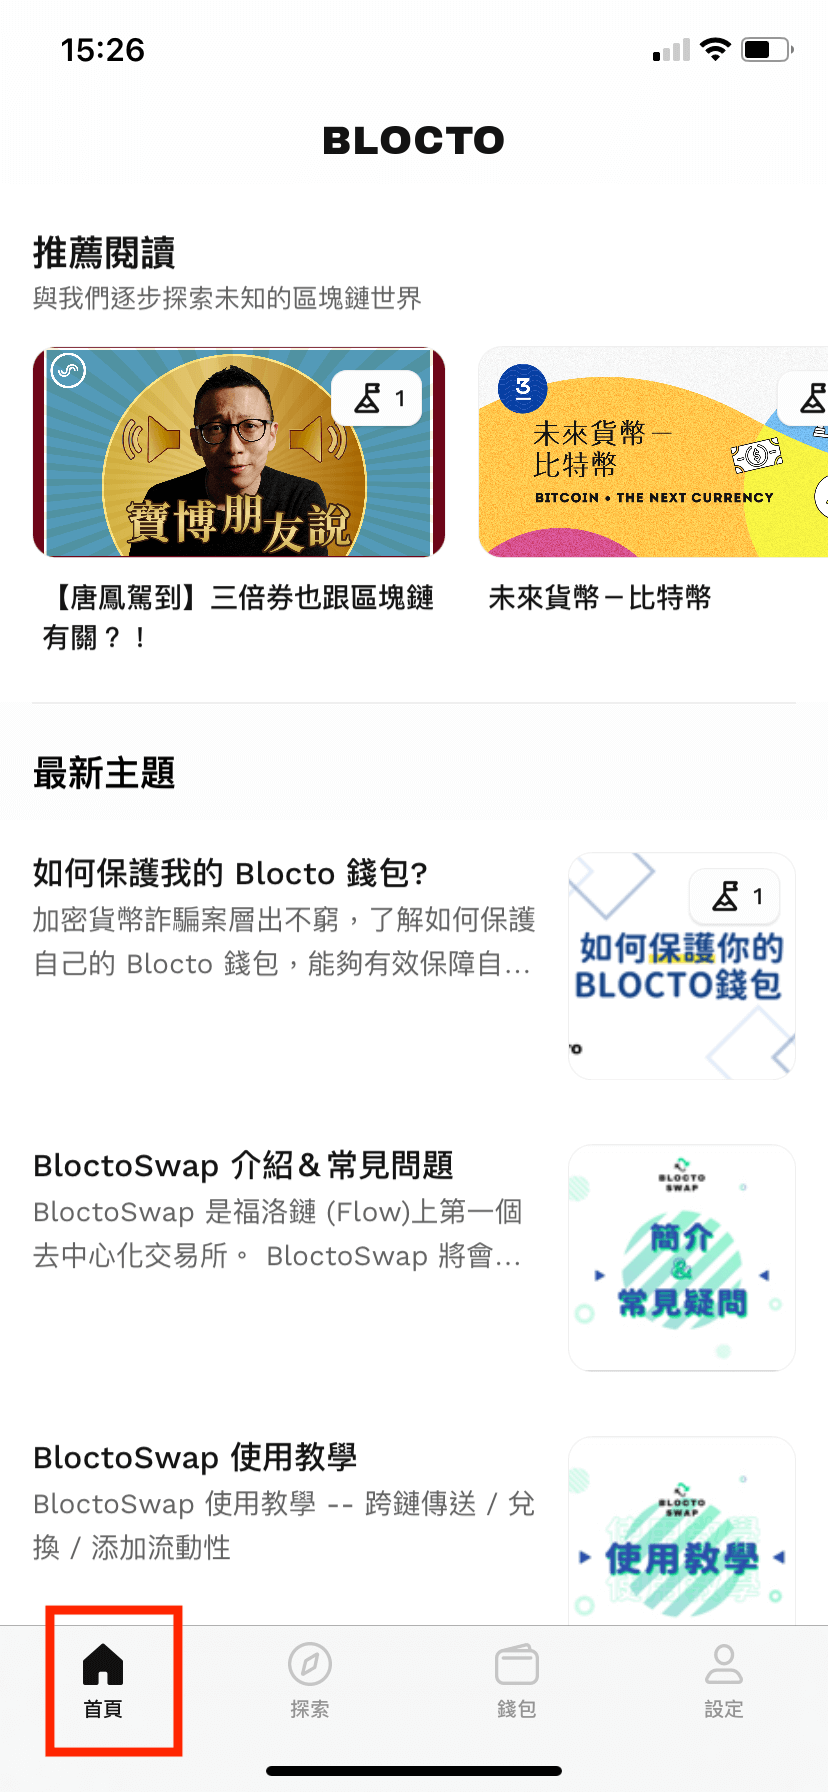 Blocto  - 零門檻打開區塊鏈世界大門的台灣錢包